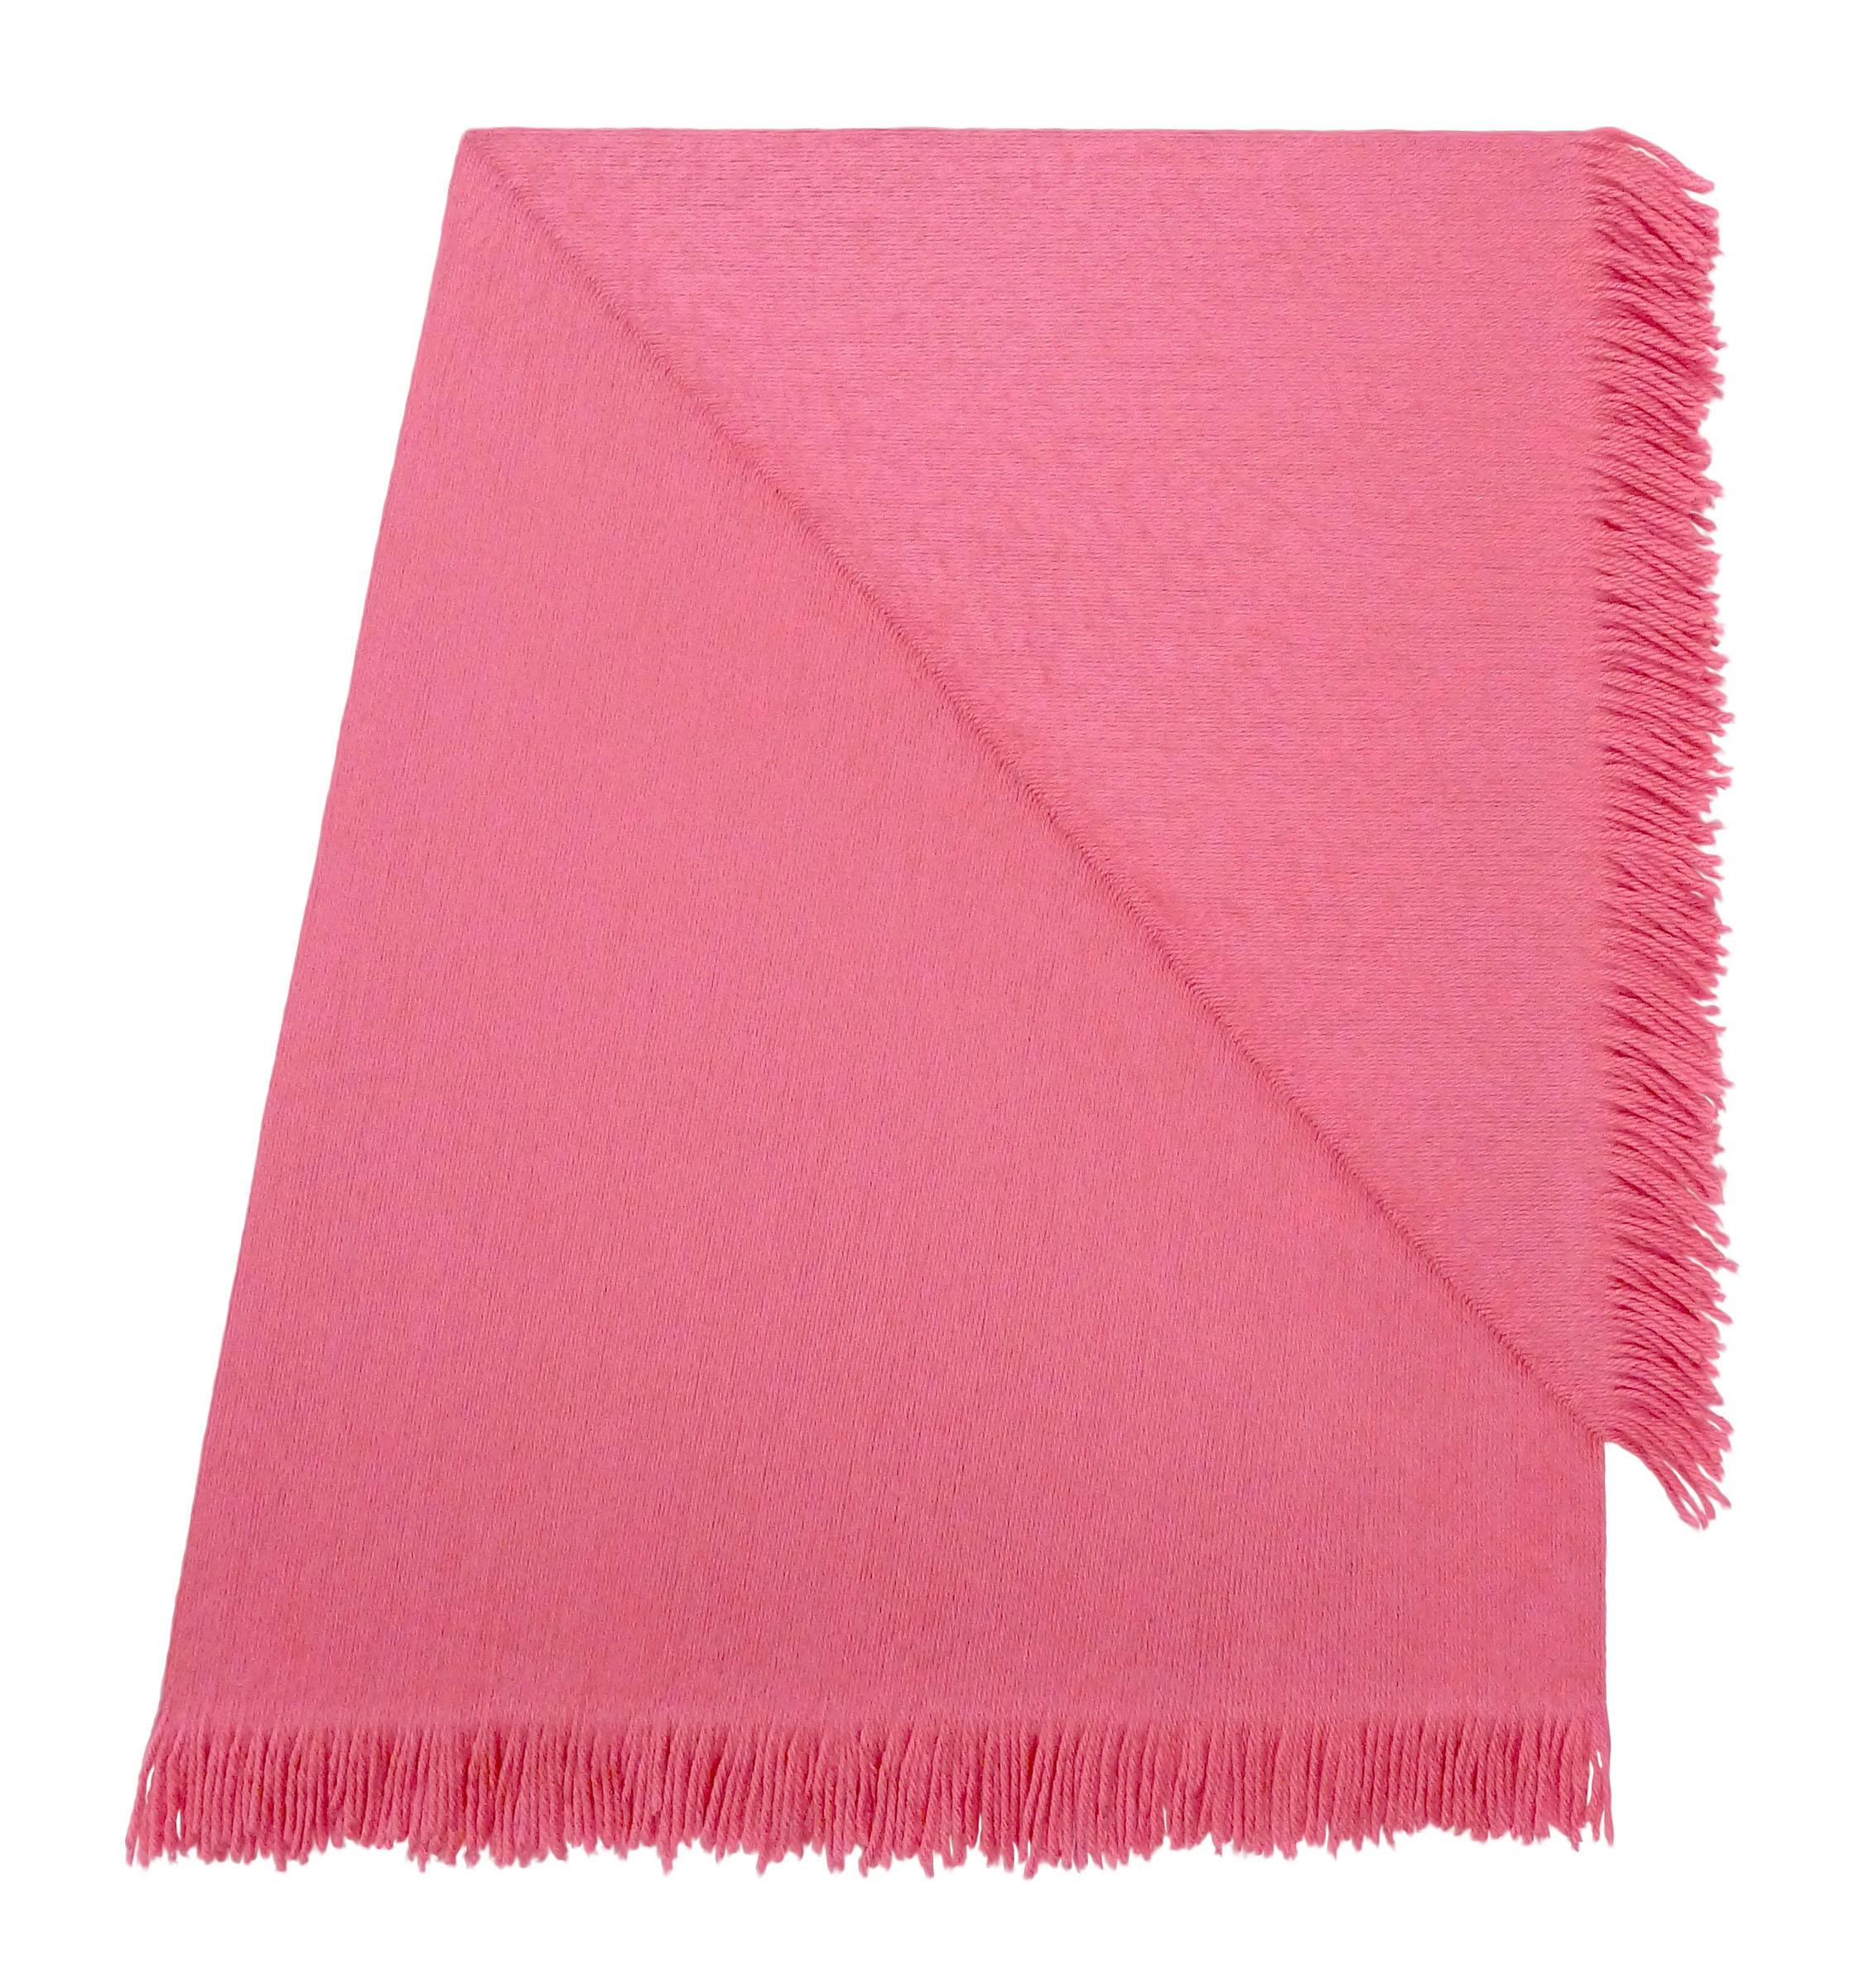 Matthew Larson Abstract Painting - Pink Fold, acrylic fibers, velcro and linen on panel